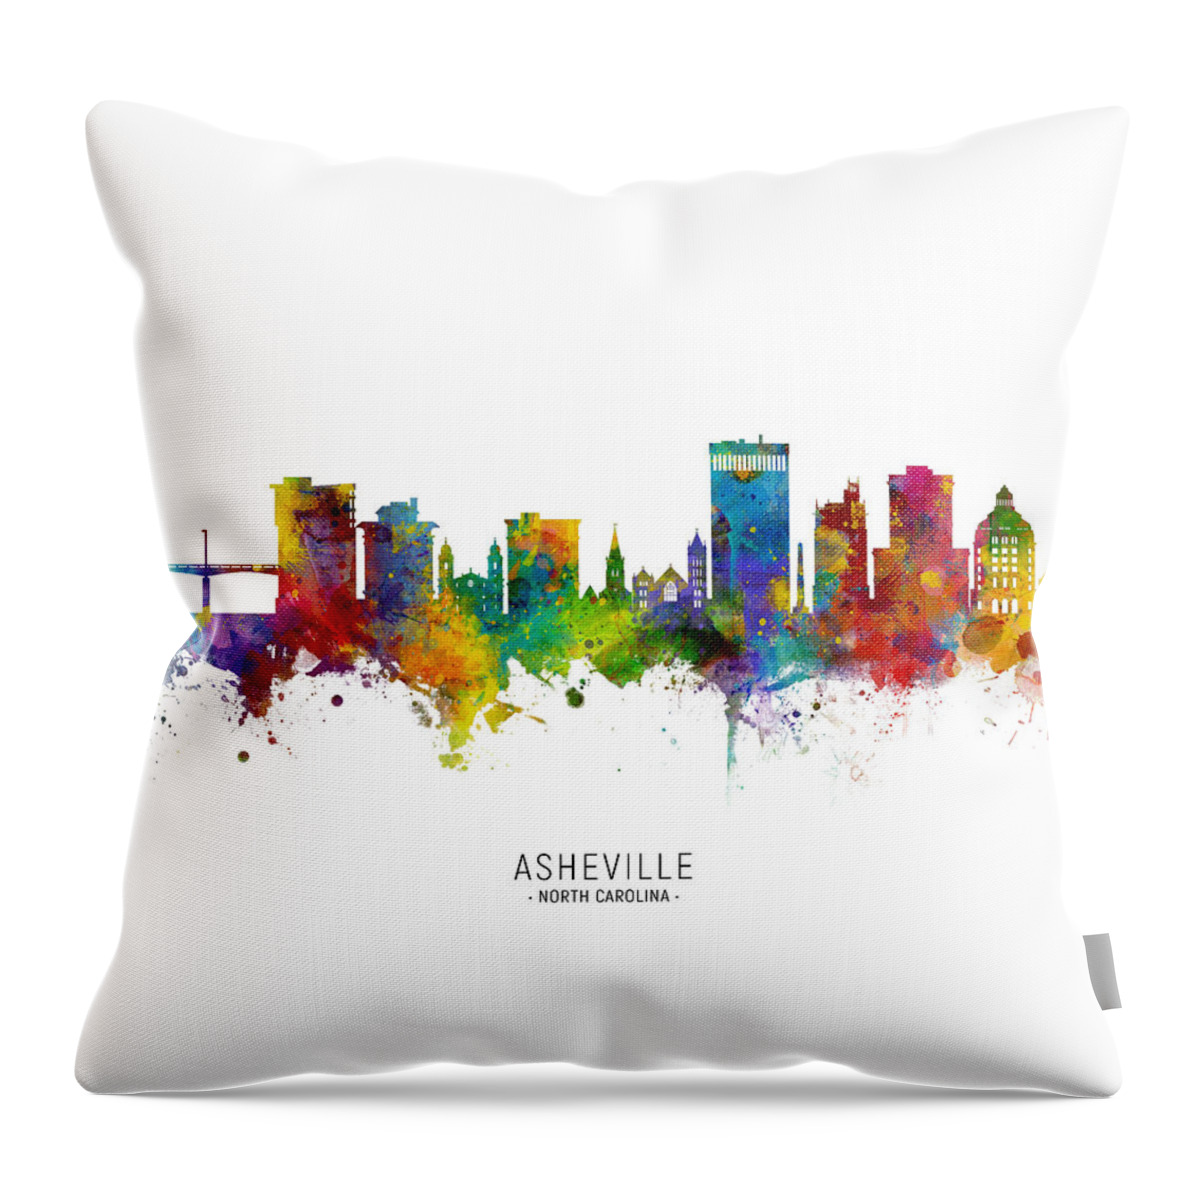 Asheville Throw Pillow featuring the digital art Asheville North Carolina Skyline by Michael Tompsett